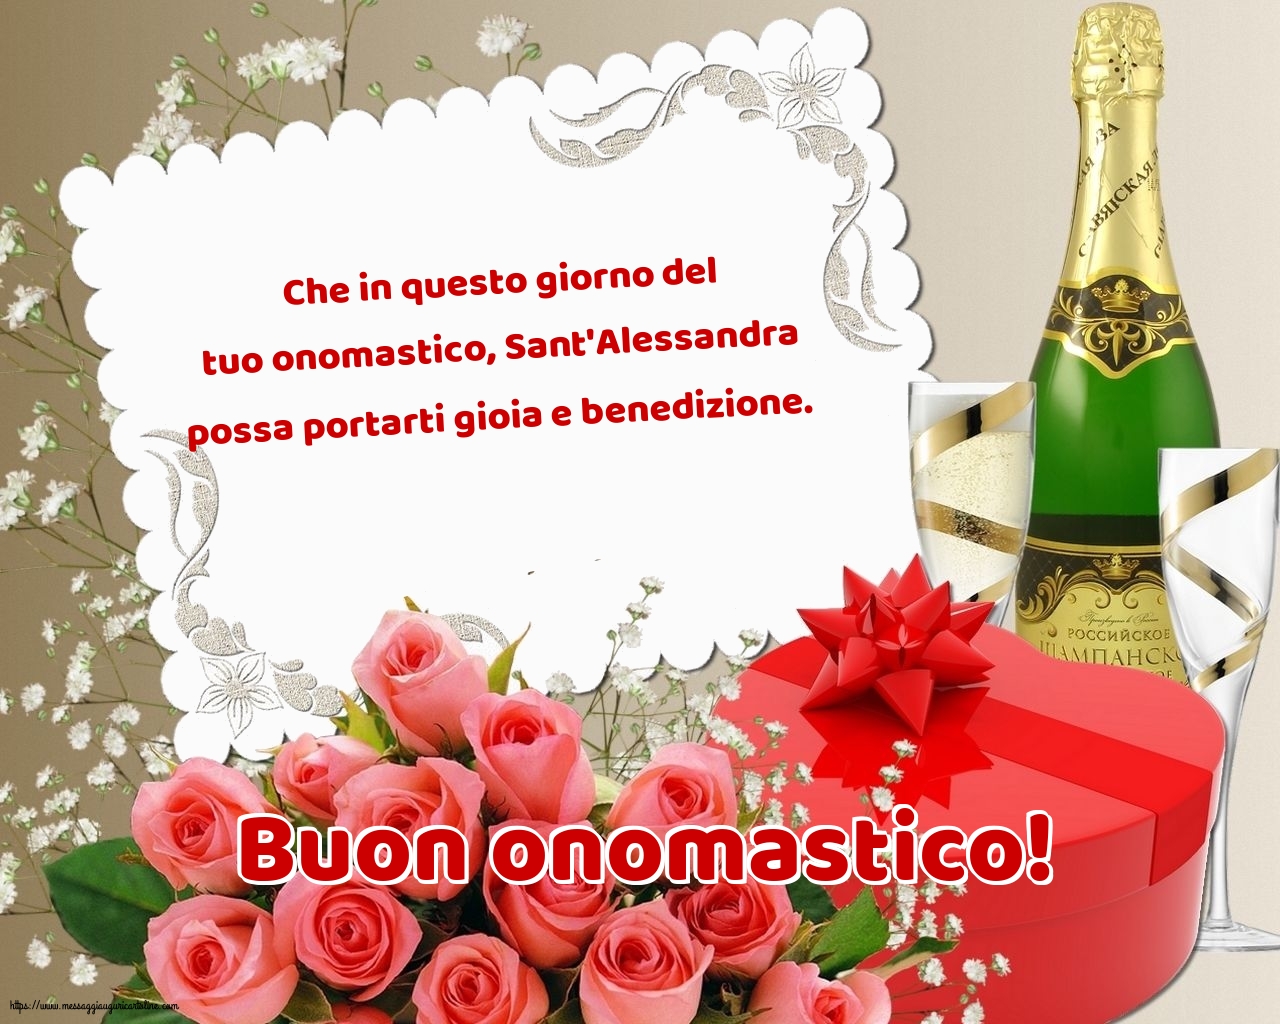 Cartoline di Sant'Alessandra - Buon onomastico! - messaggiauguricartoline.com